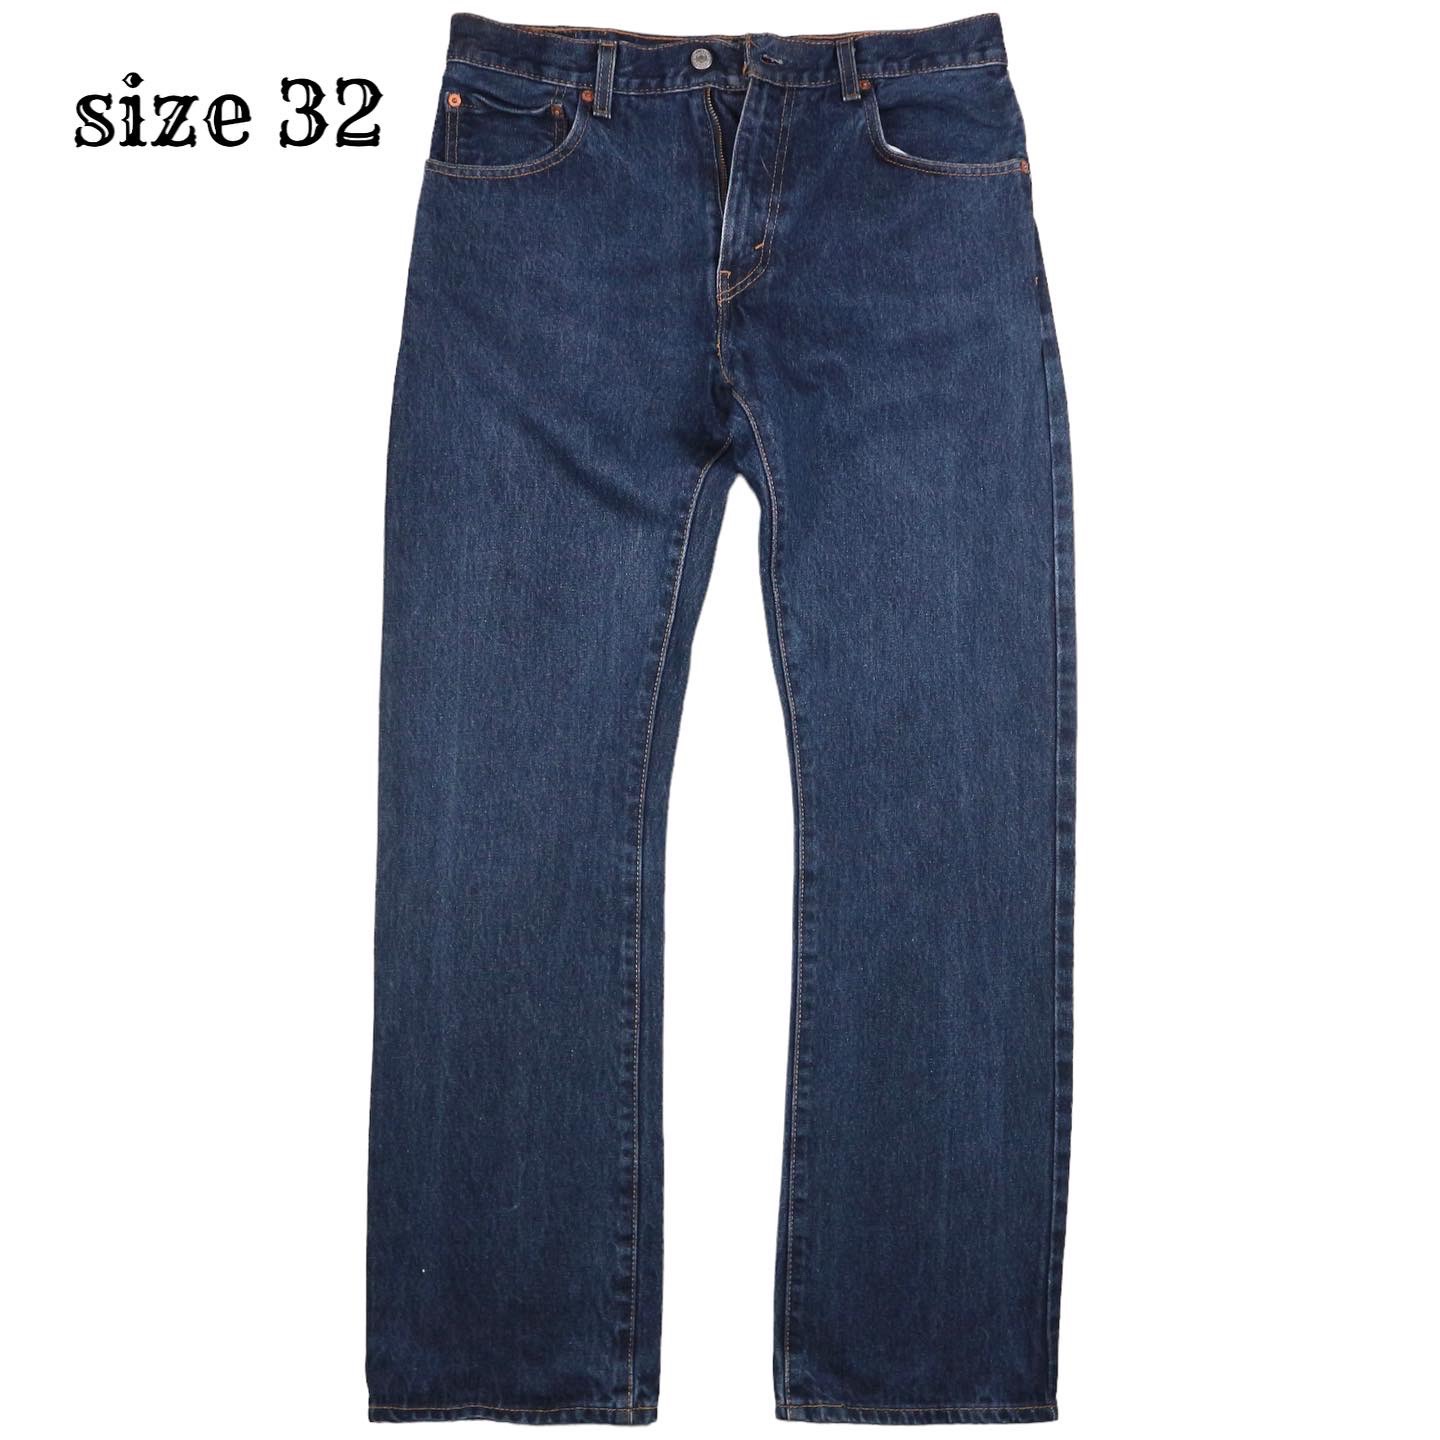 Levi's 517 Denim Jeans Size 32 denimister